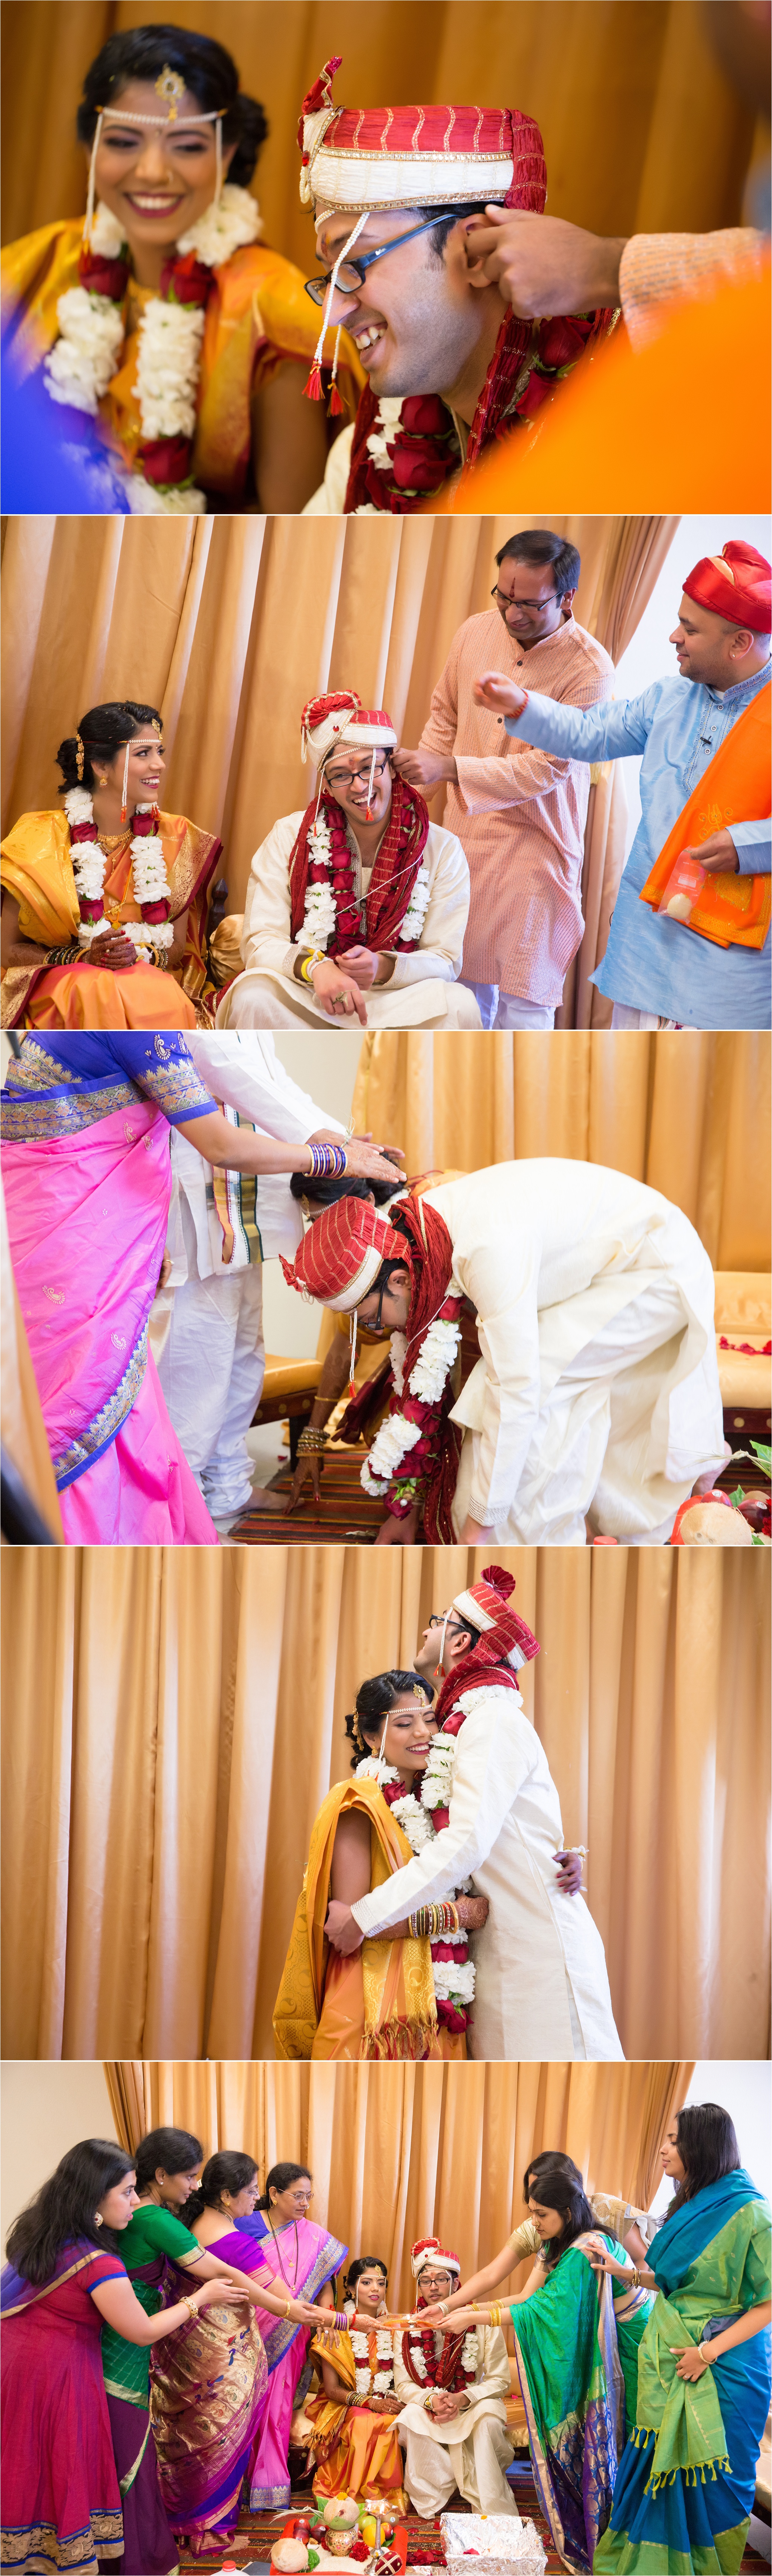 Livermore_Temple_Hindu_Wedding_Photos_0017.jpg